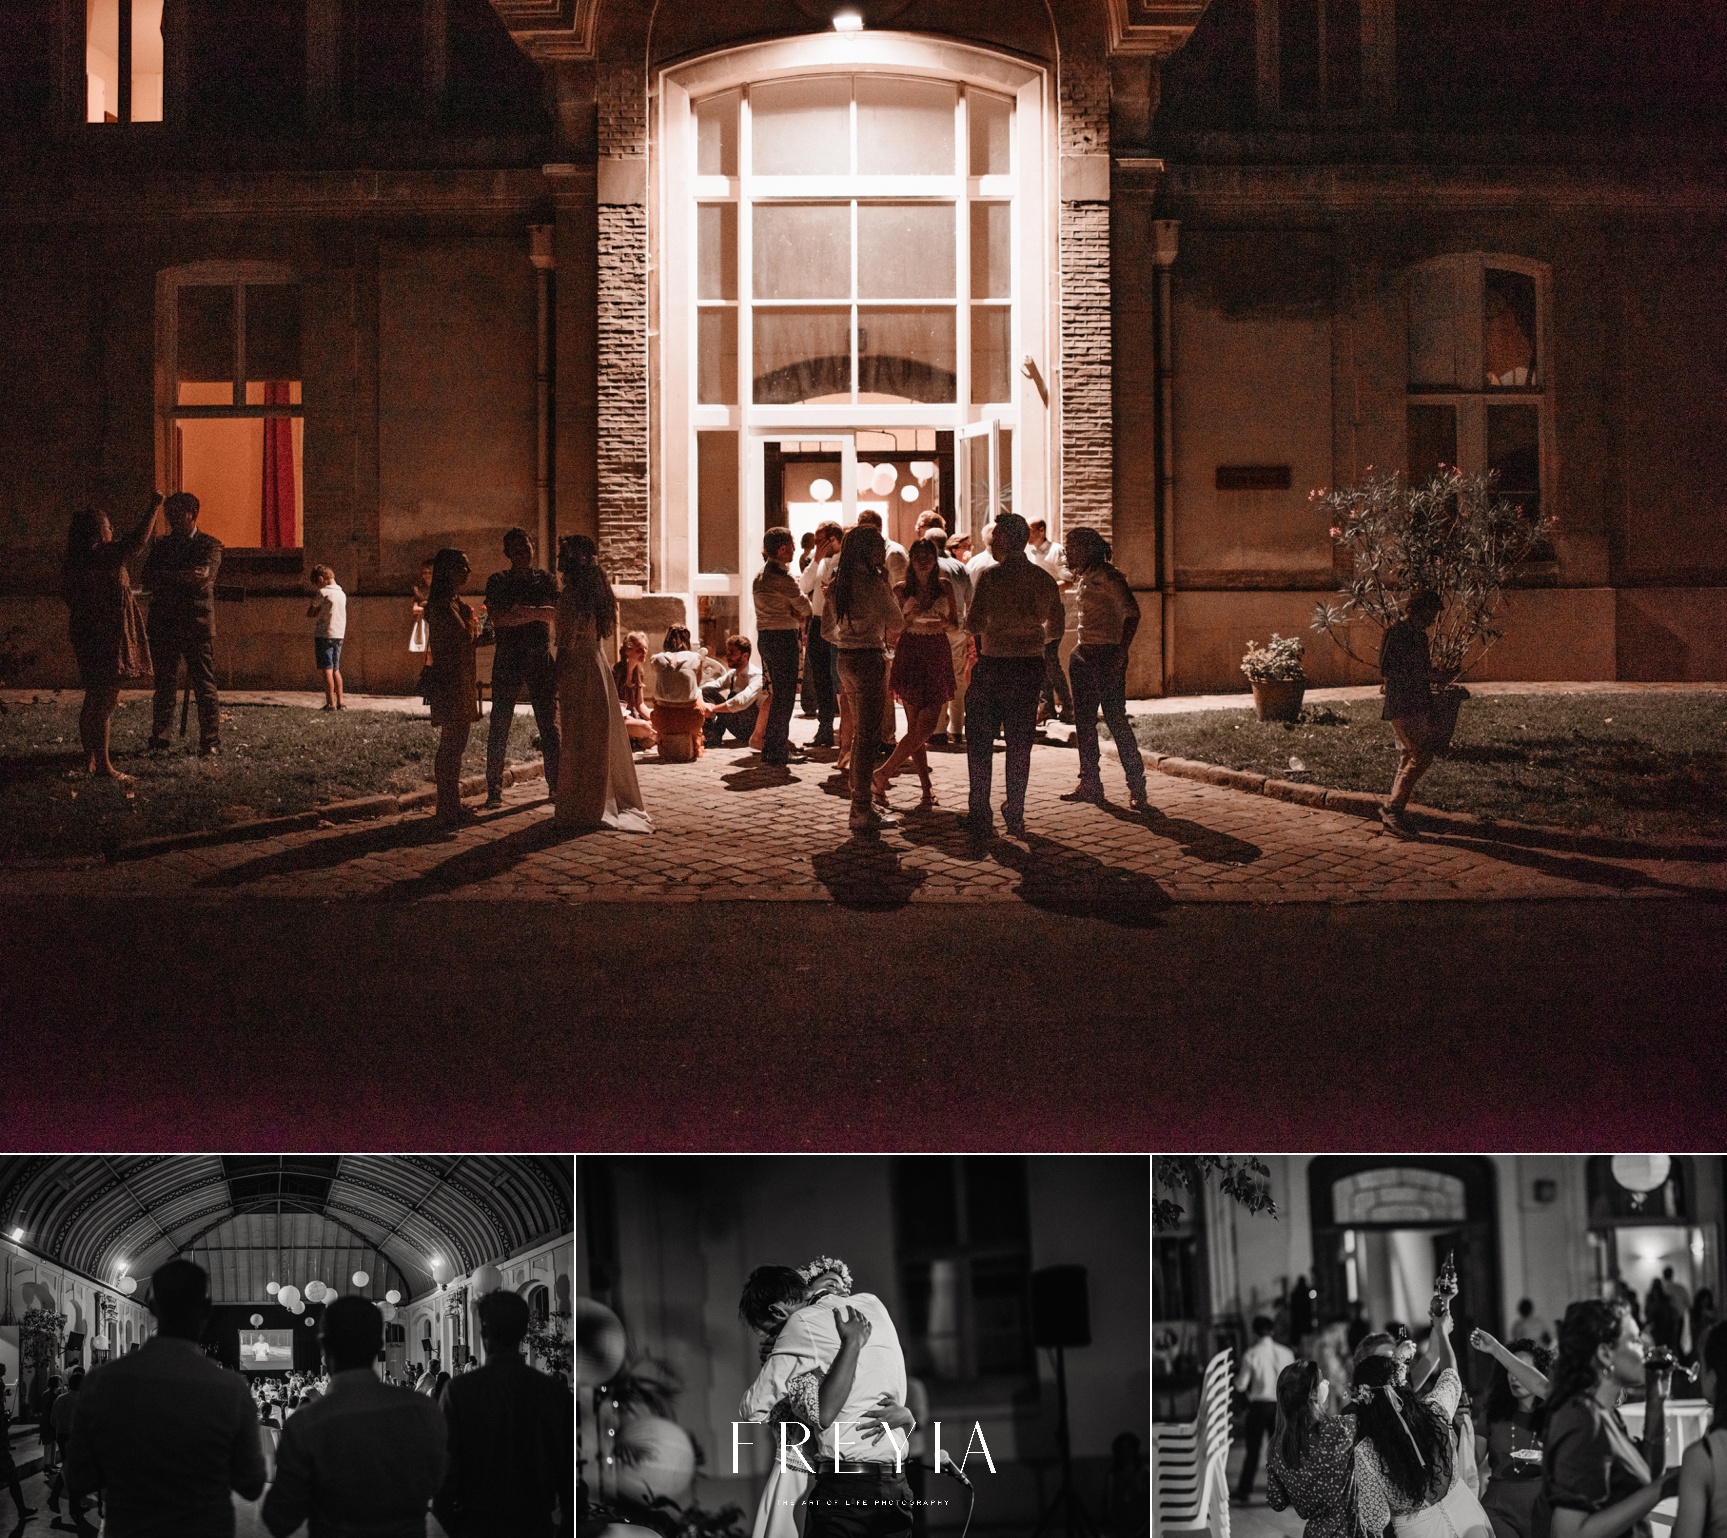 R + T |  mariage reportage alternatif moody intime minimaliste vintage naturel boho boheme |  PHOTOGRAPHE mariage PARIS france destination  | FREYIA photography_-364.jpg (Copy)